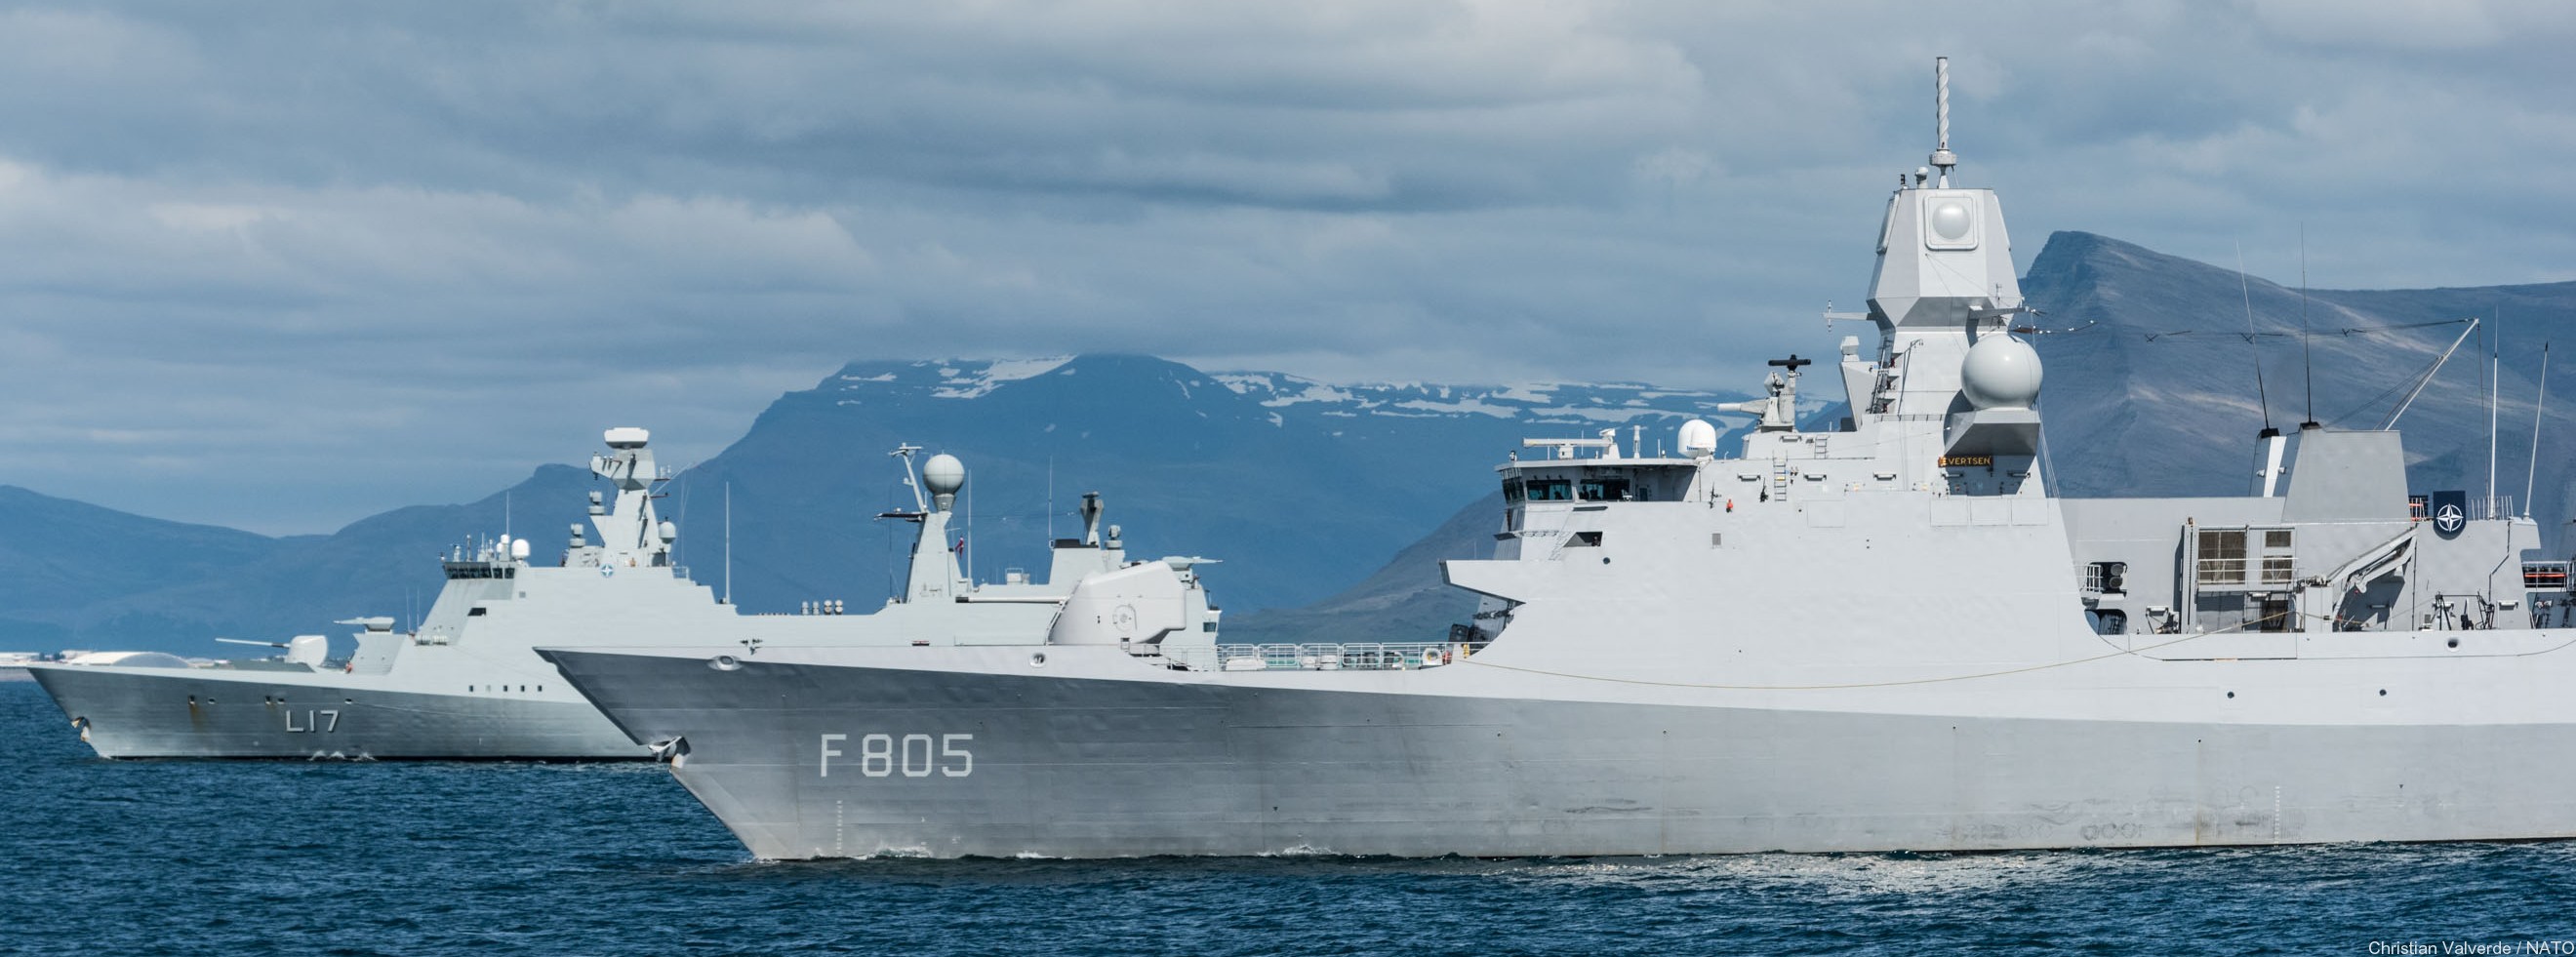 f-805 hnlms evertsen guided missile frigate ffg lcf royal netherlands navy 07